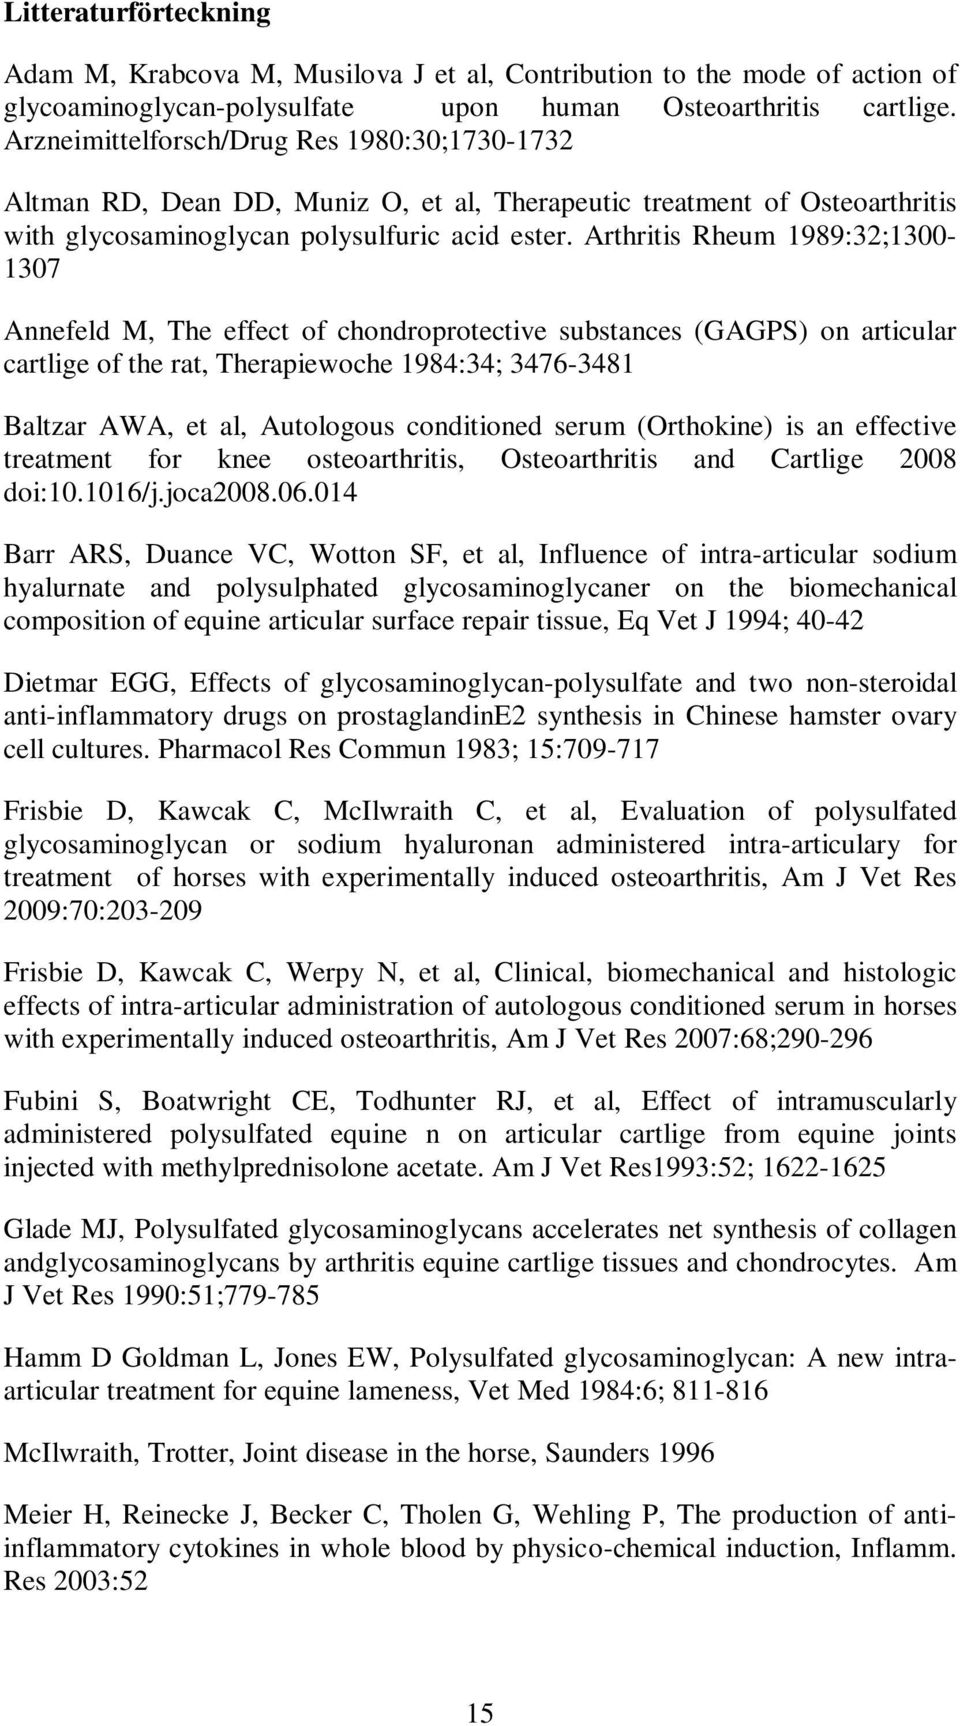 Arthritis Rheum 1989:32;1300-1307 Annefeld M, The effect of chondroprotective substances (GAGPS) on articular cartlige of the rat, Therapiewoche 1984:34; 3476-3481 Baltzar AWA, et al, Autologous